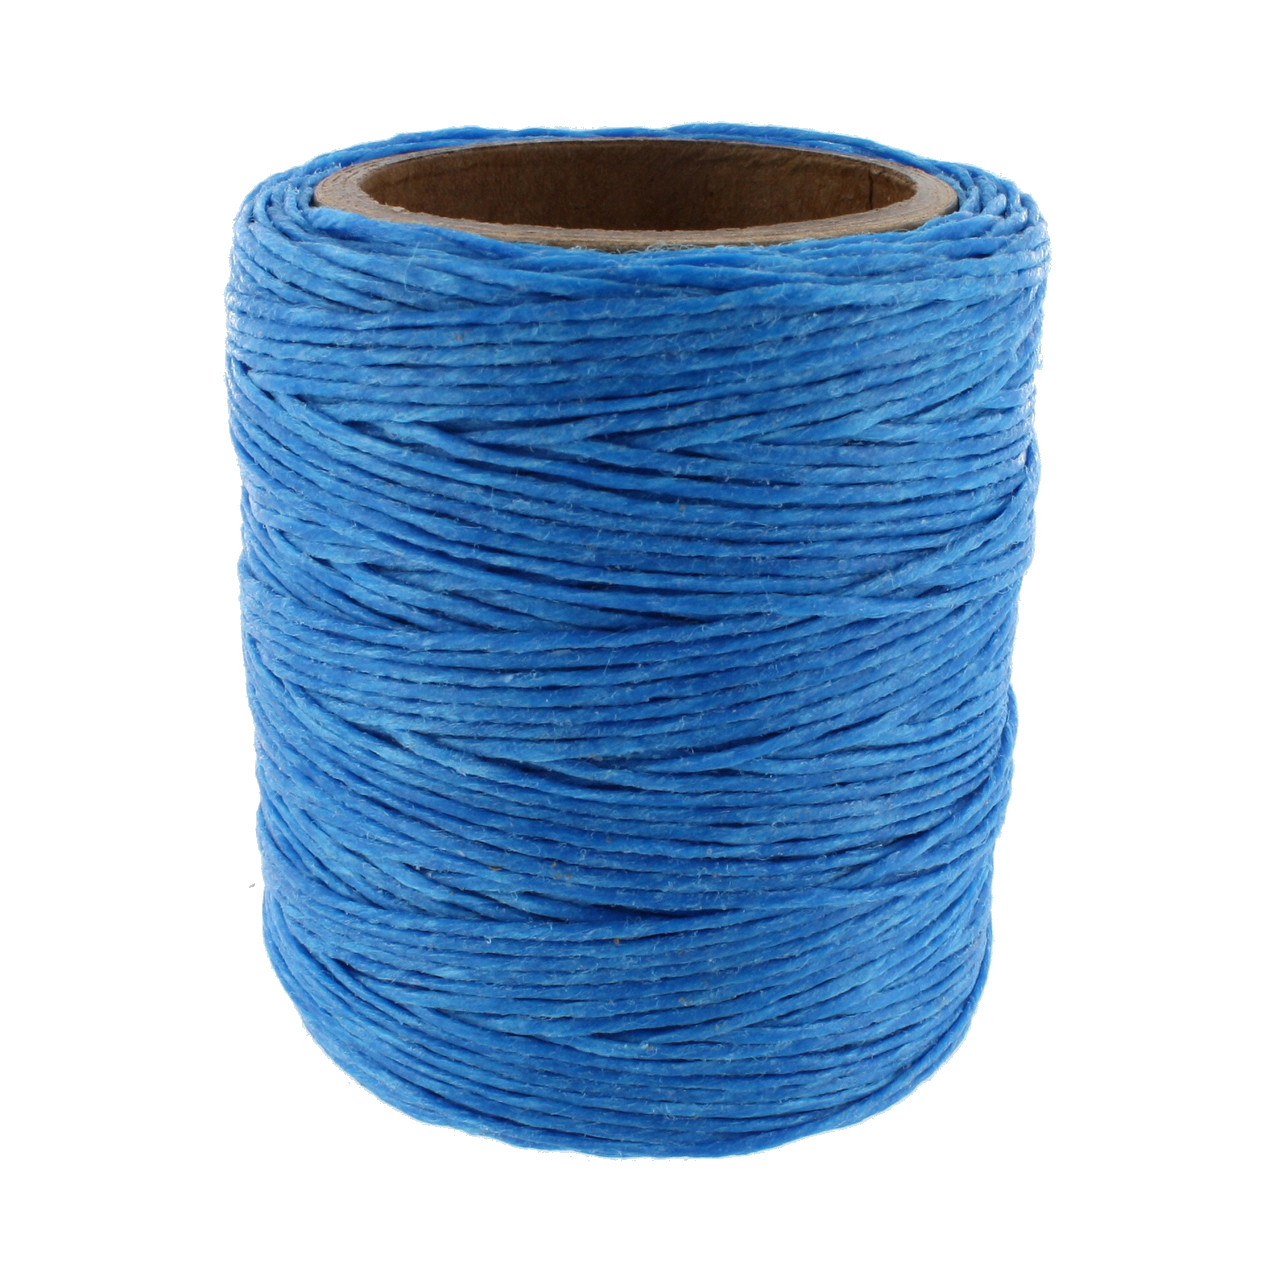 Nylon Cord - Turquoise Blue 1mm 7 meter spool